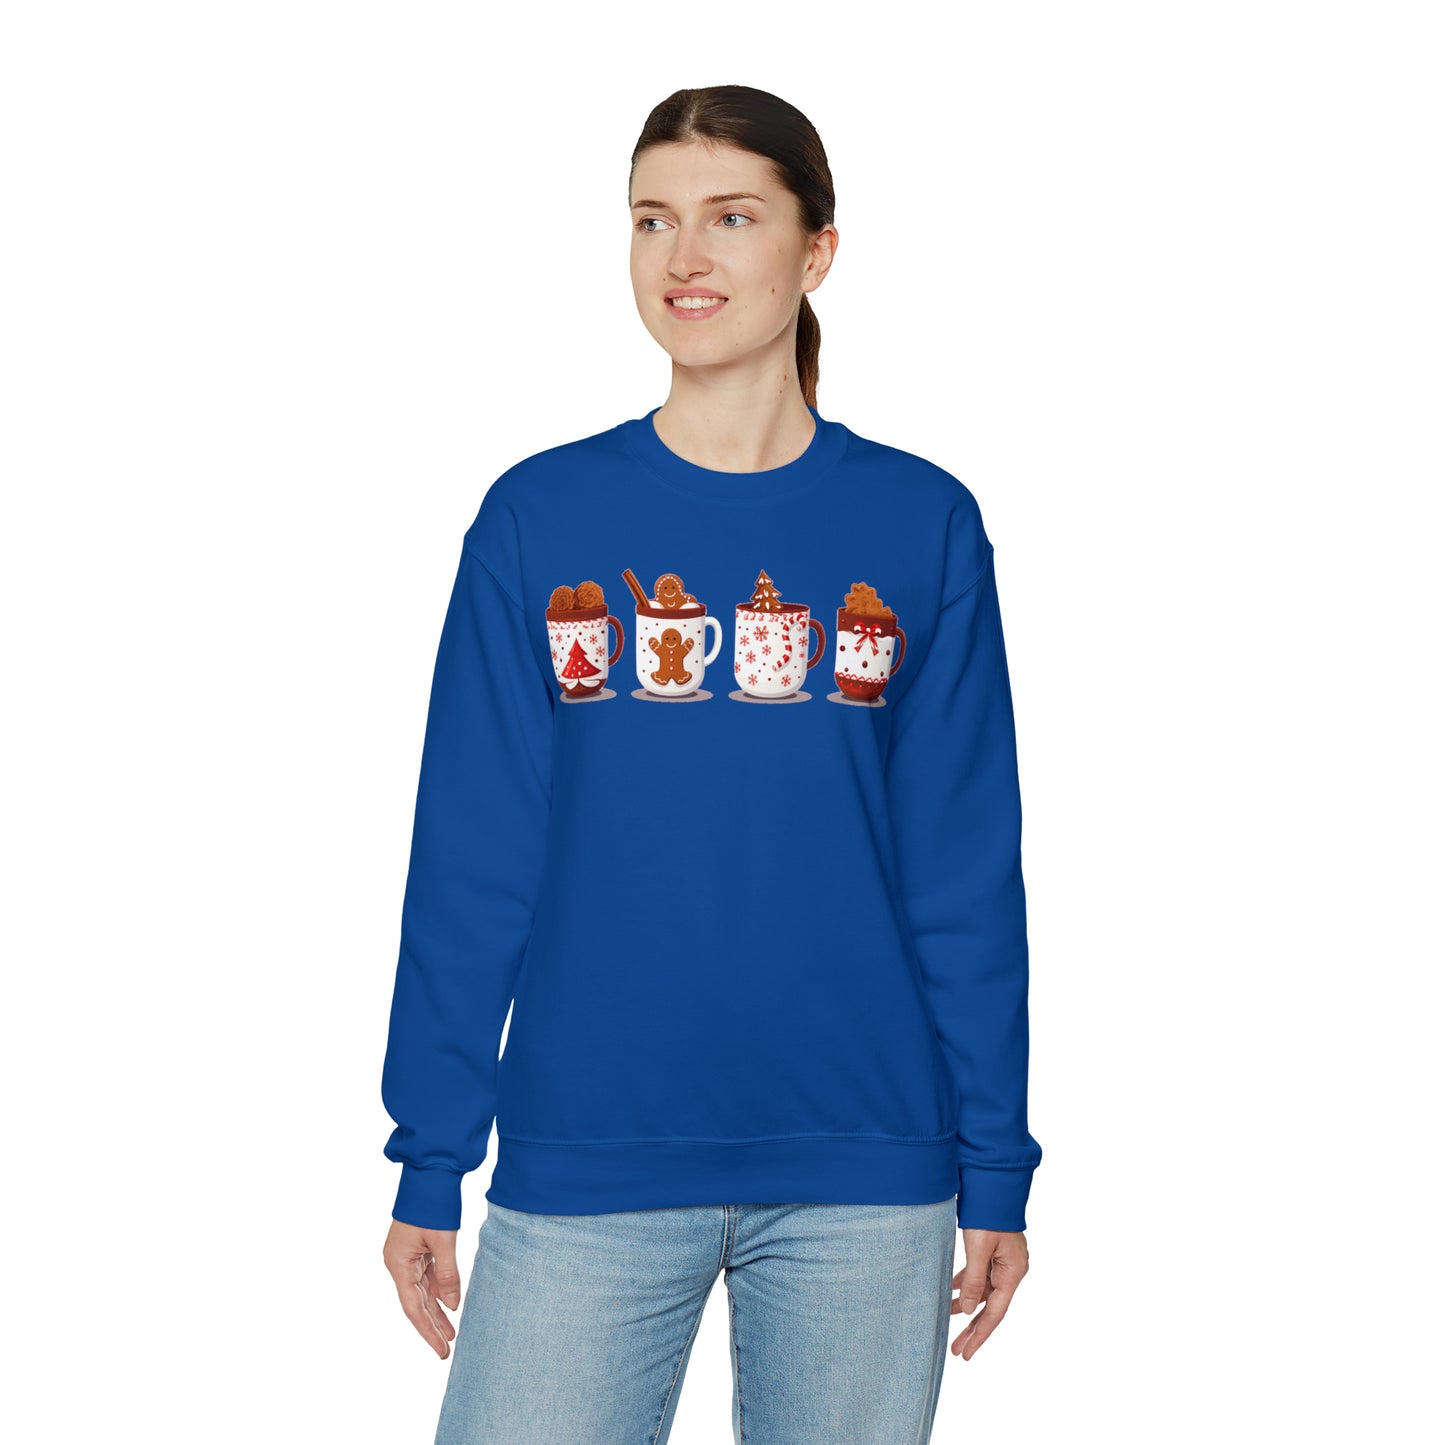 Christmas Coffee Sweatshirt, Gingerman Xmas Graphic Crewneck Fleece Cotton Sweater Jumper Pullover Men Women Adult Aesthetic